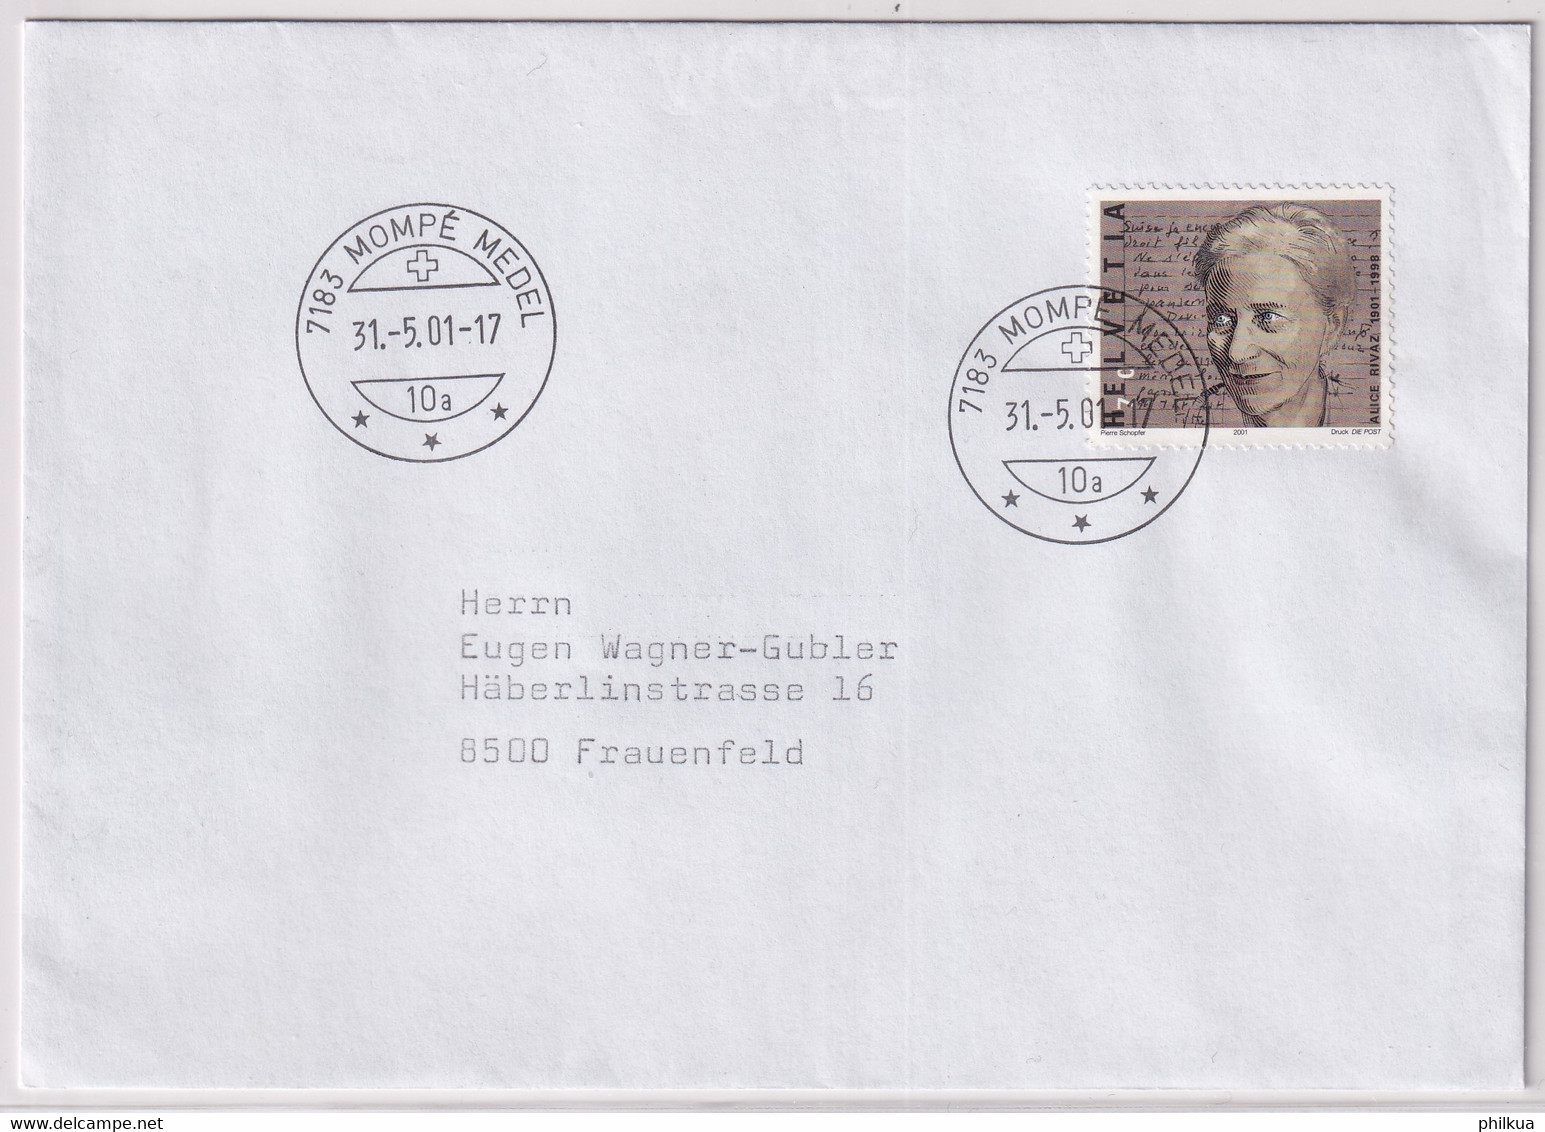 1015 Auf Brief Mit Letzttagstempel Poststelle MOMPÉ MEDEL (GR) - Briefe U. Dokumente